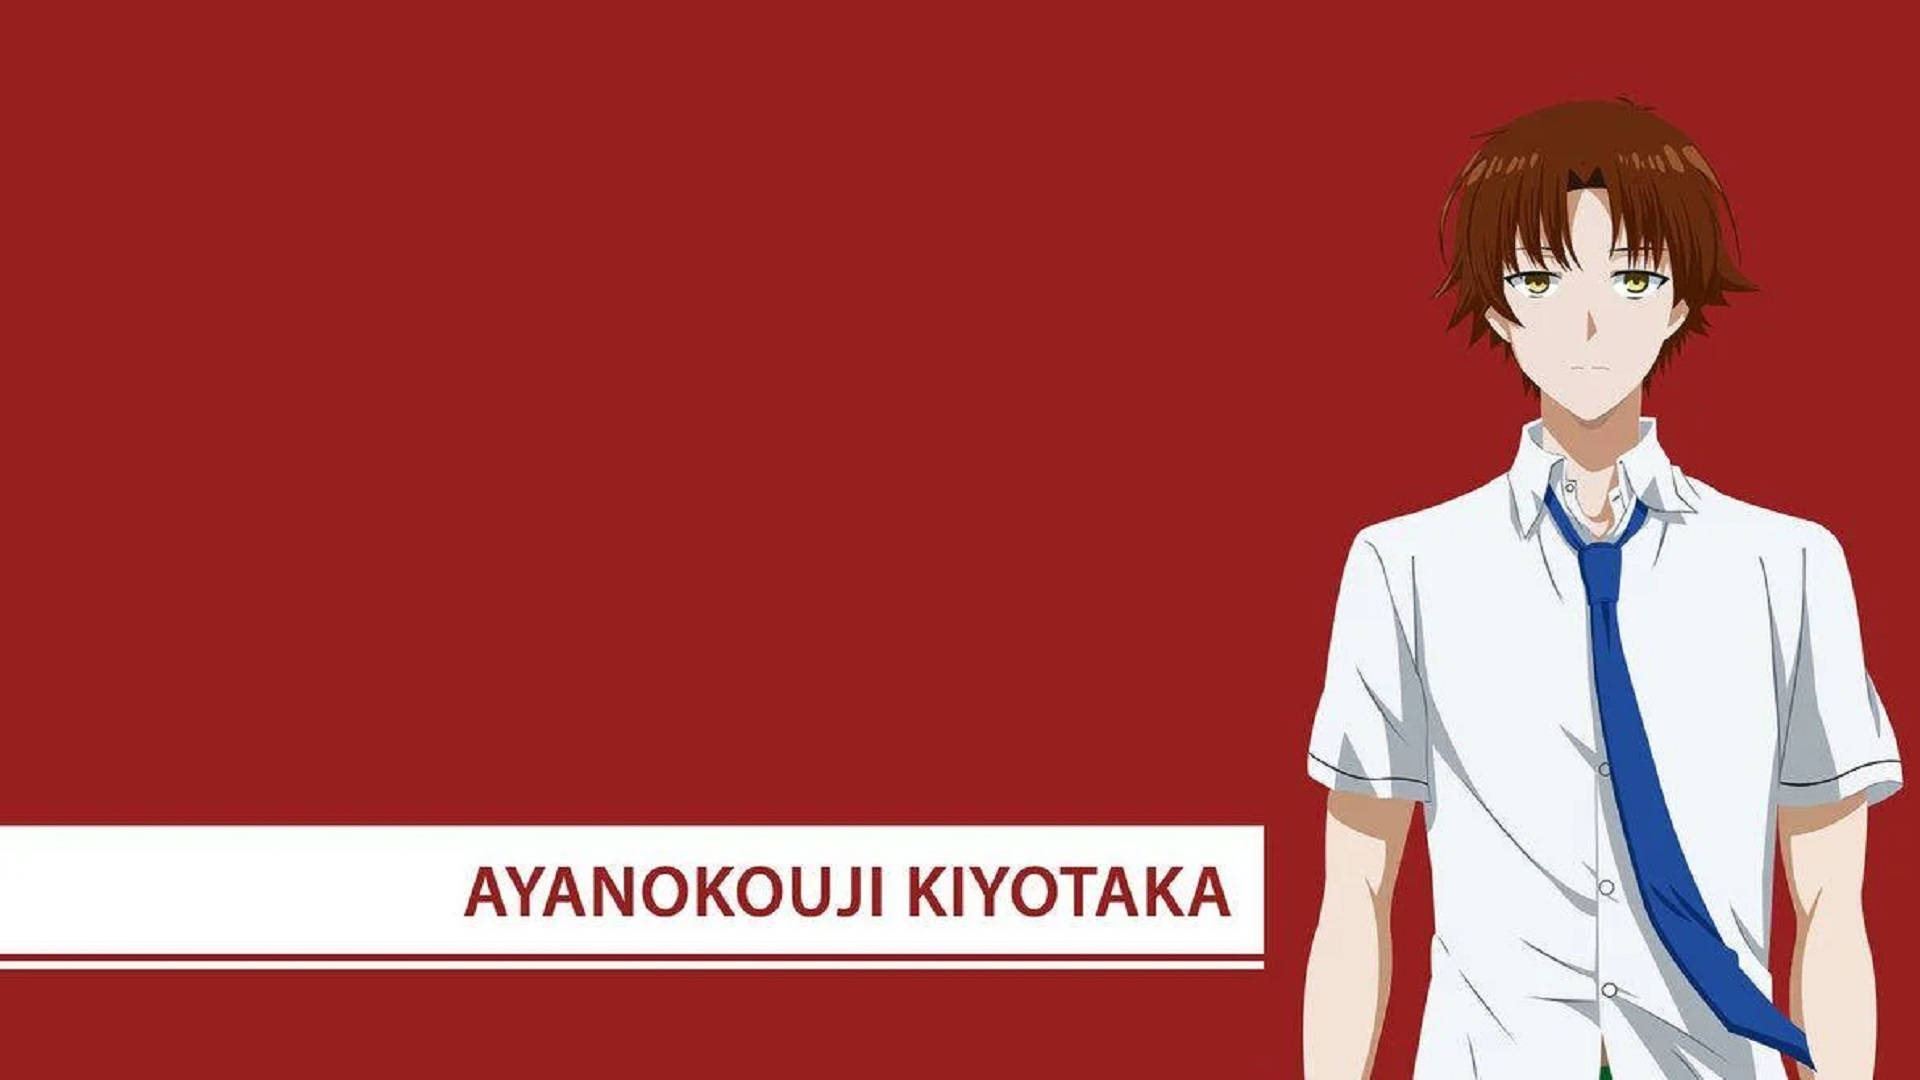 Kiyotaka Ayanokoji In Red